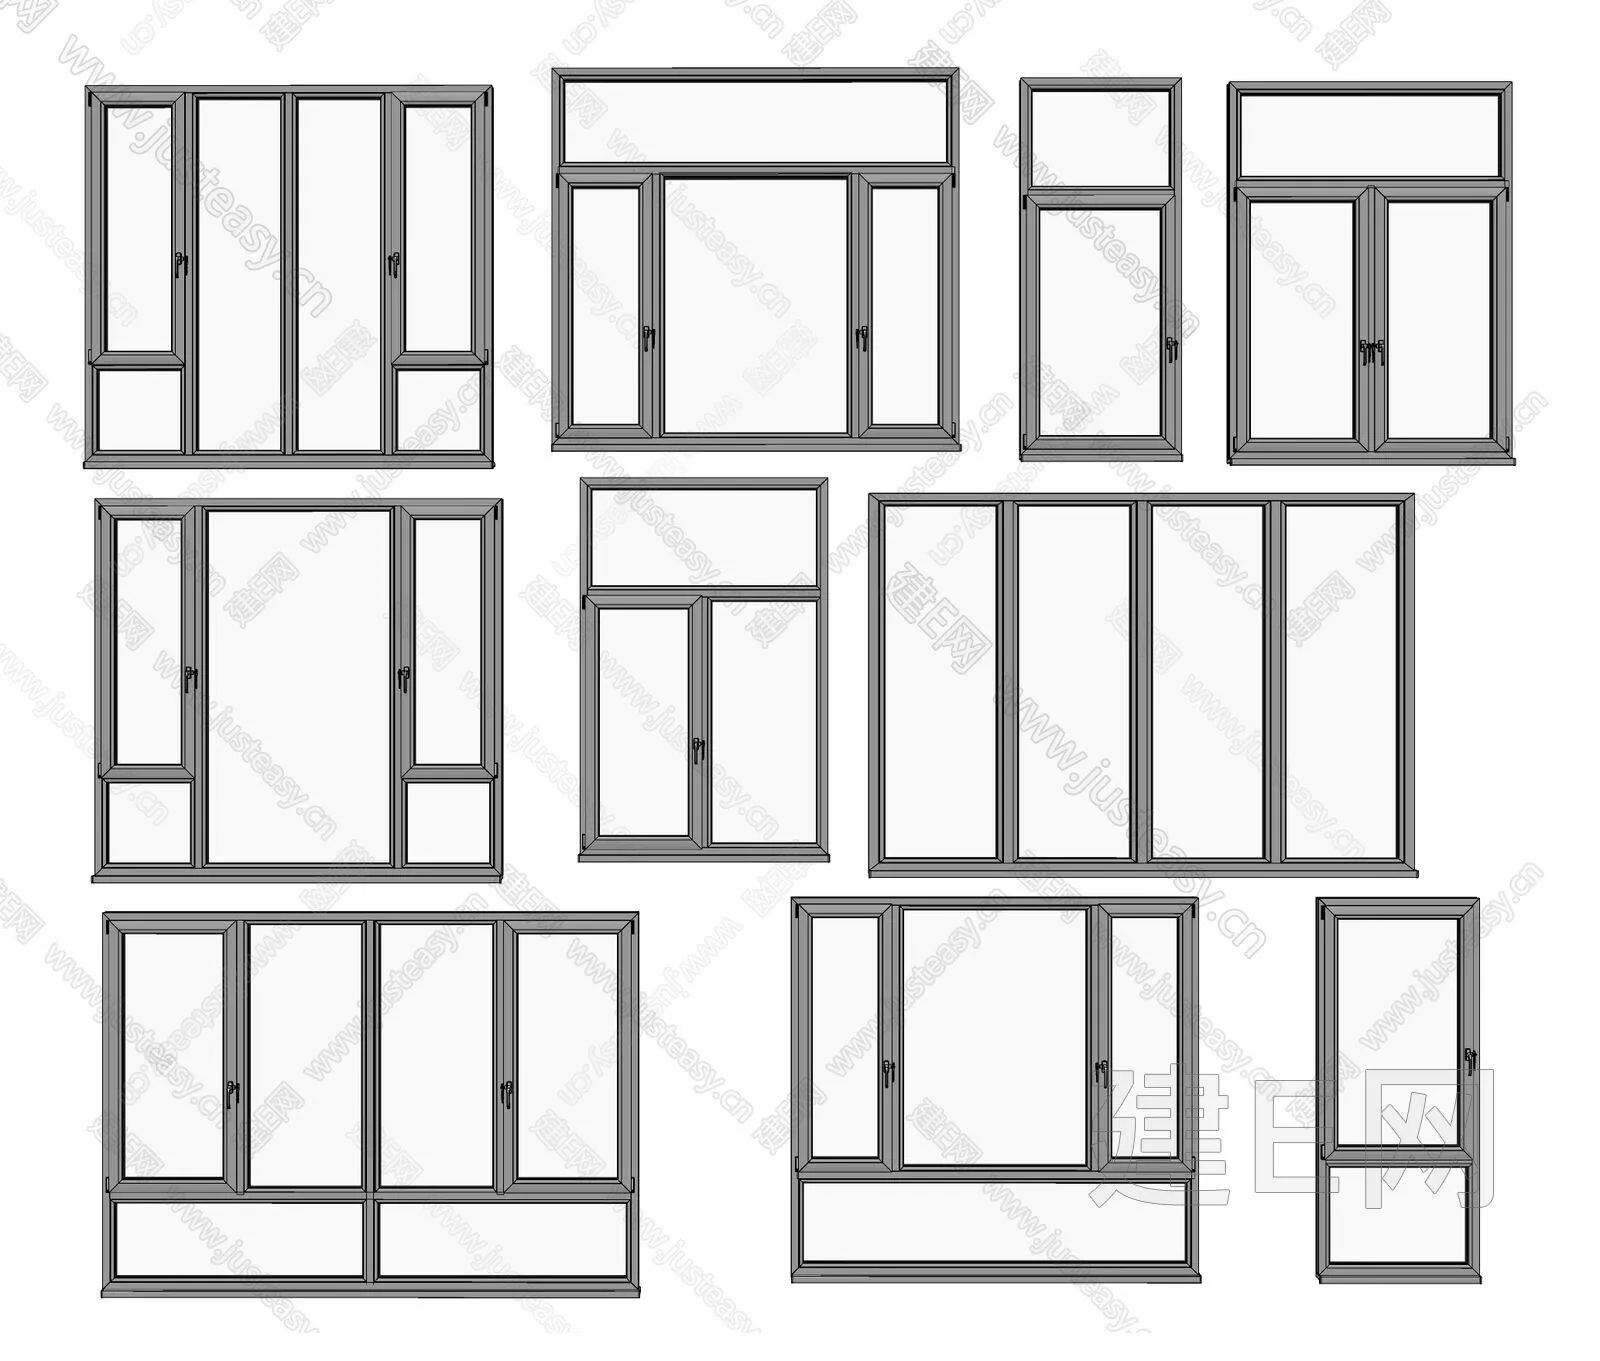 MODERN DOOR AND WINDOWS - SKETCHUP 3D MODEL - ENSCAPE - 110052668